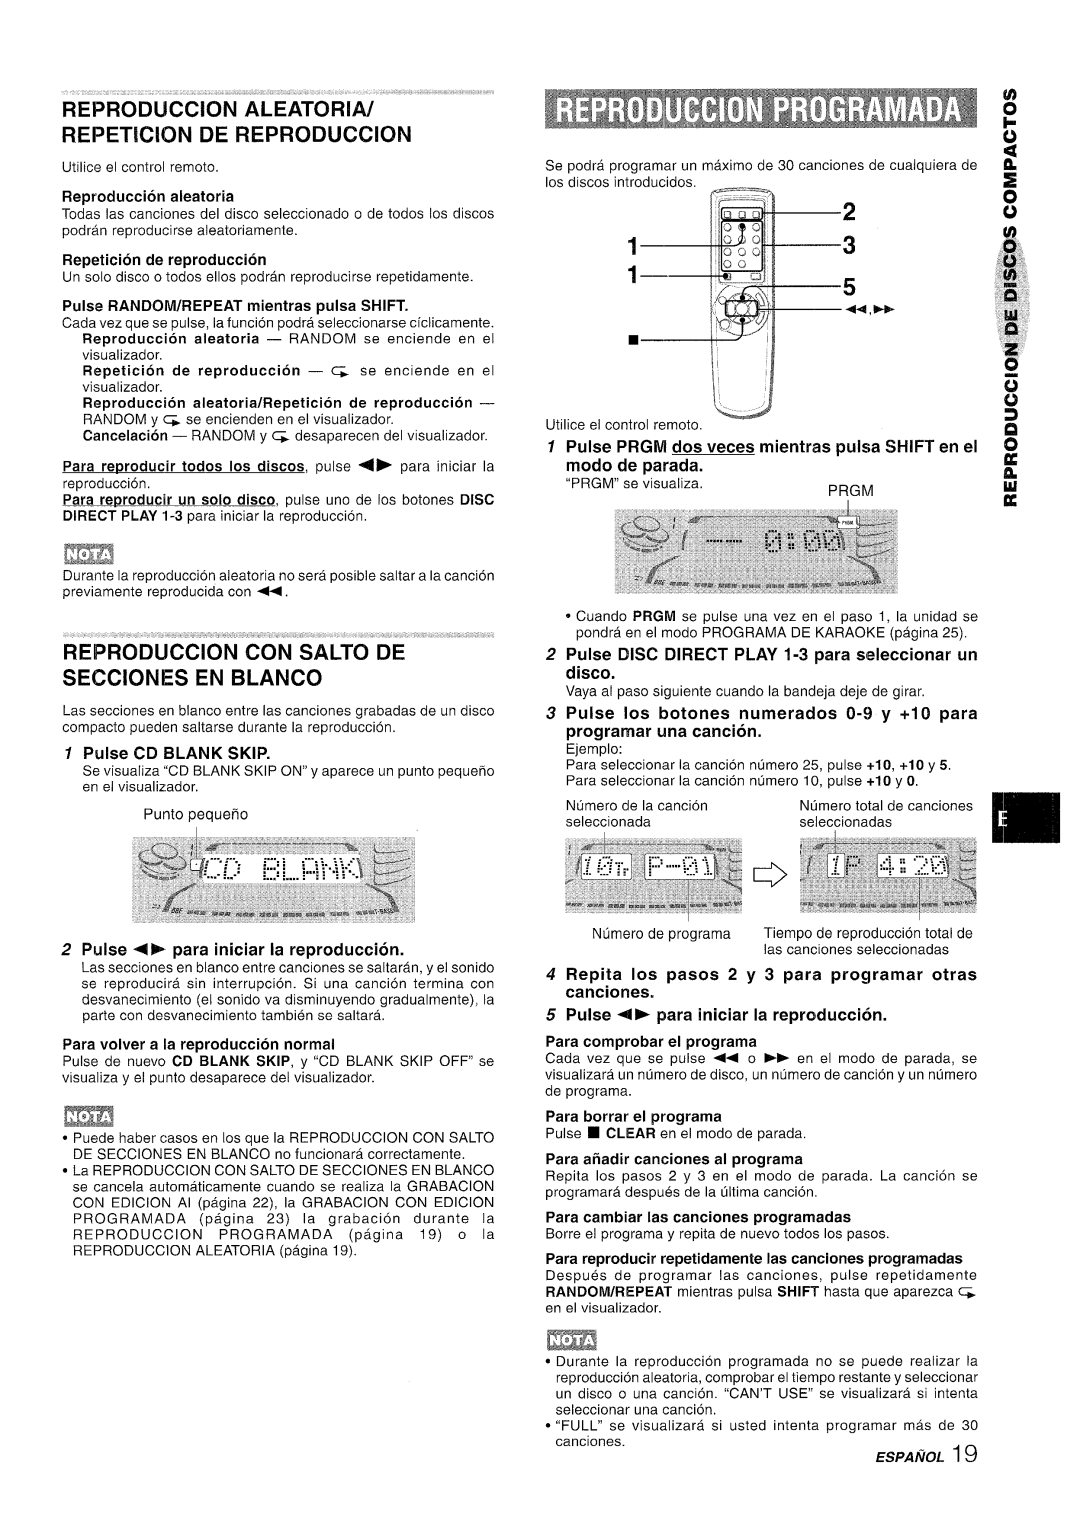 Sony NSX-A767 44,E+, REPRODUCTION ALEATORL4/ REPETKXN DE REPRODUCTION, REPRODLiCCION CON SALTO DE SECCIONES EN BLANCO 